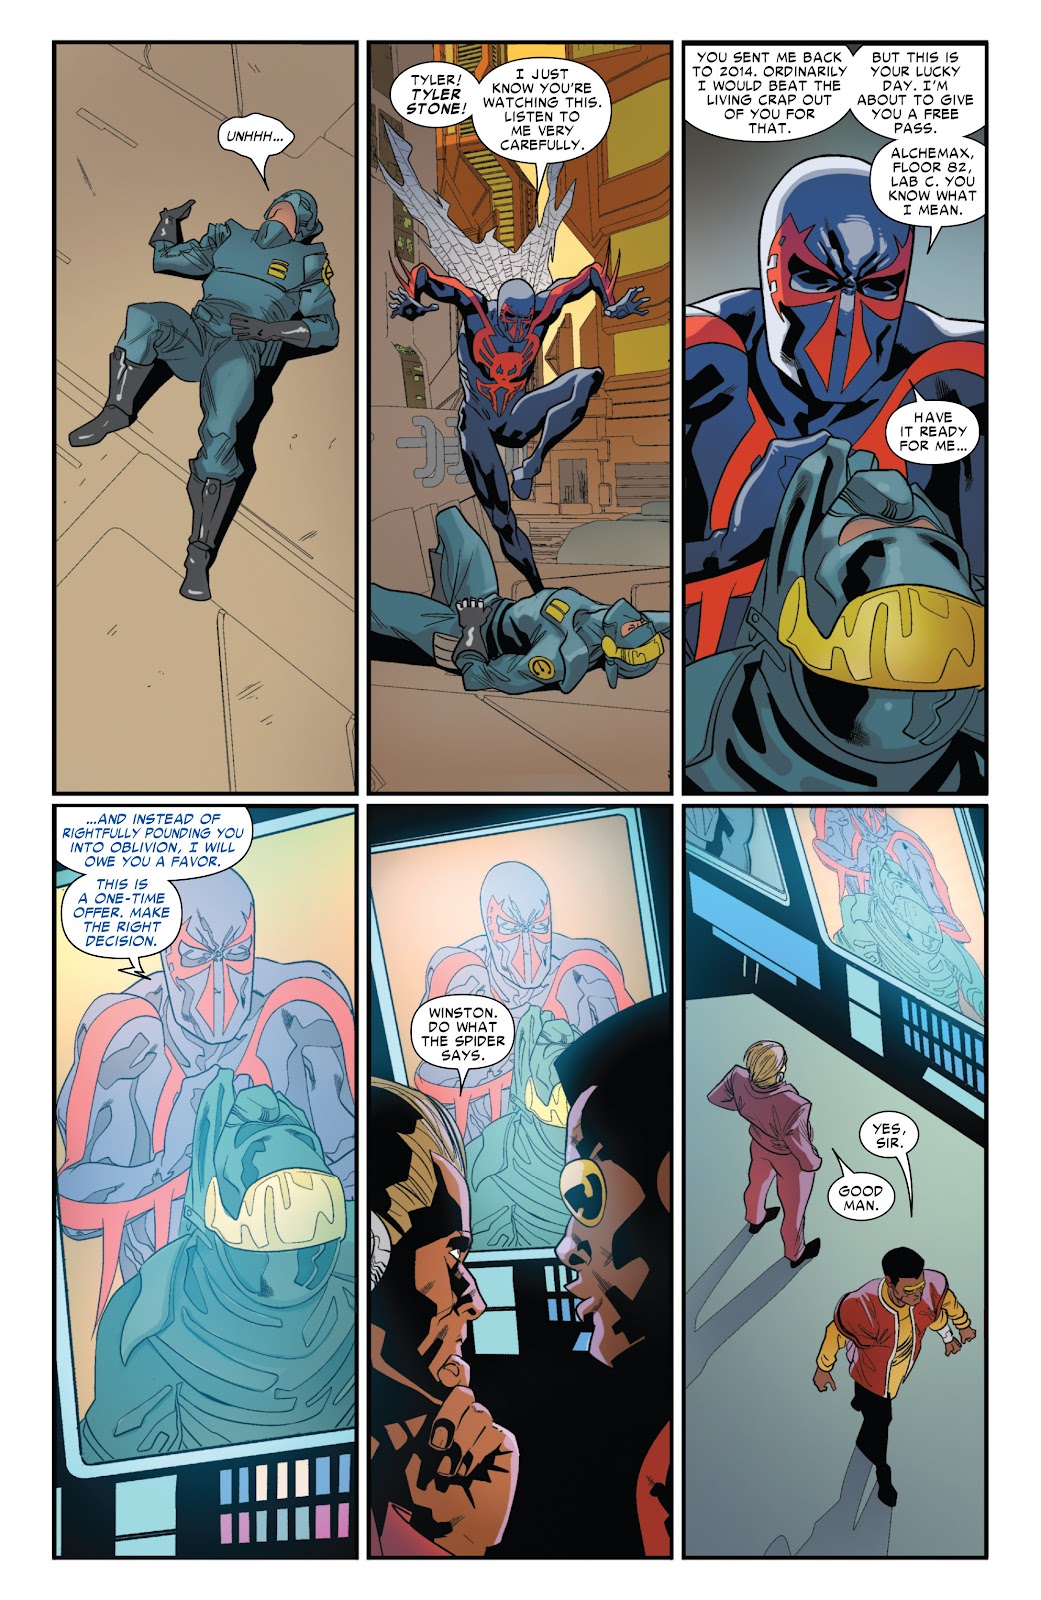 Spider-Man 2099 (2014) issue 6 - Page 16